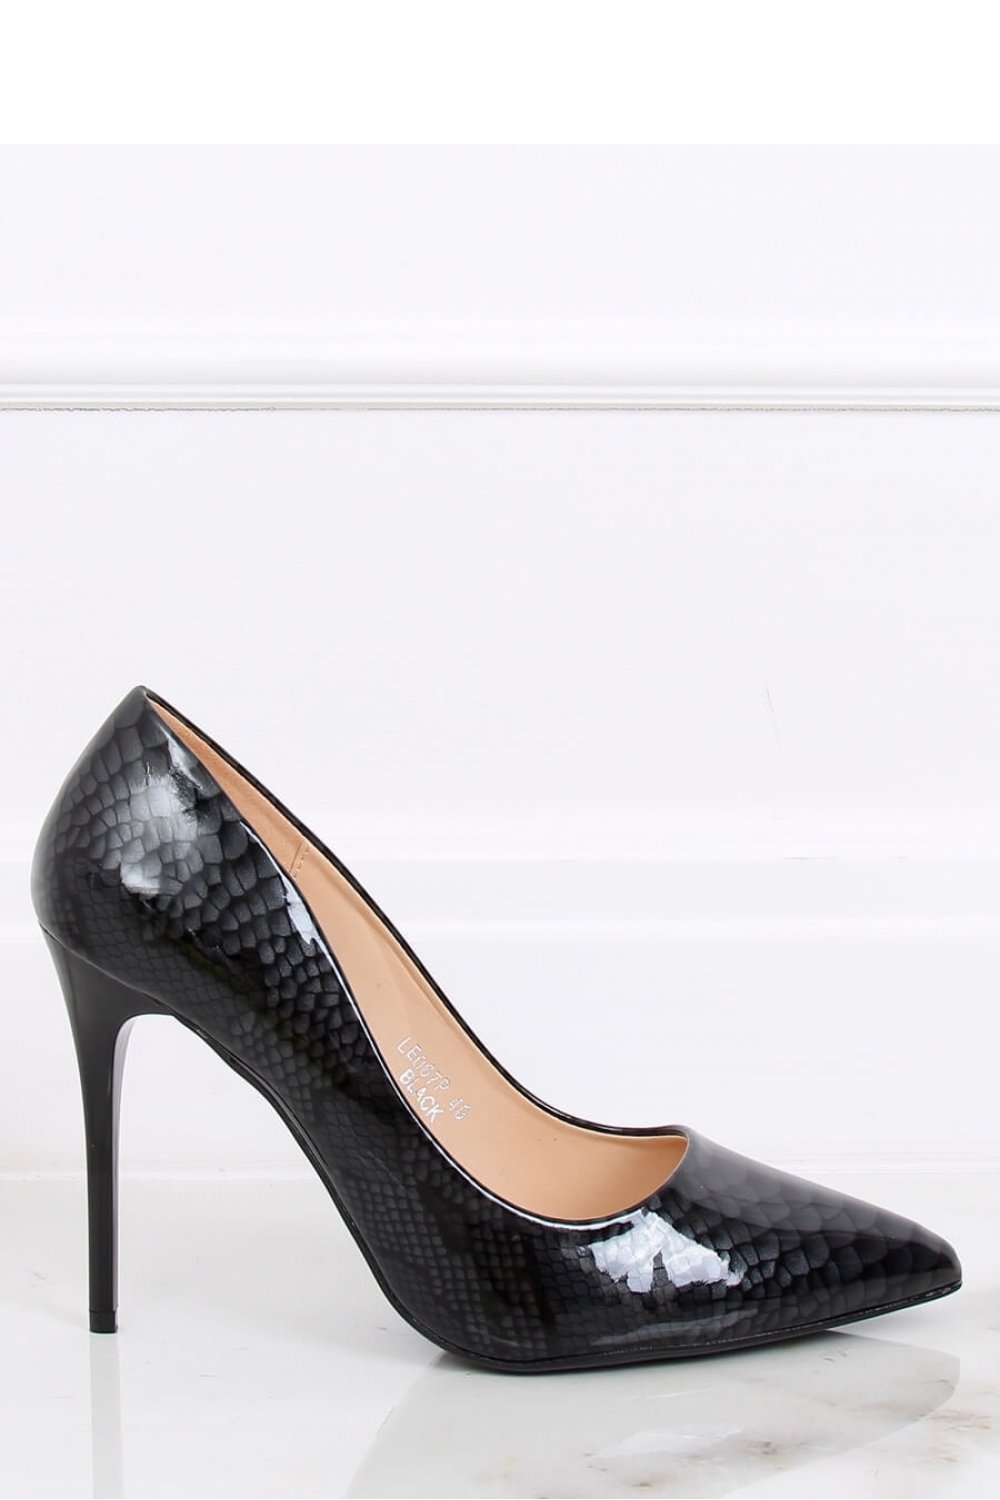 High heels model 139748 Inello Posh Styles Apparel